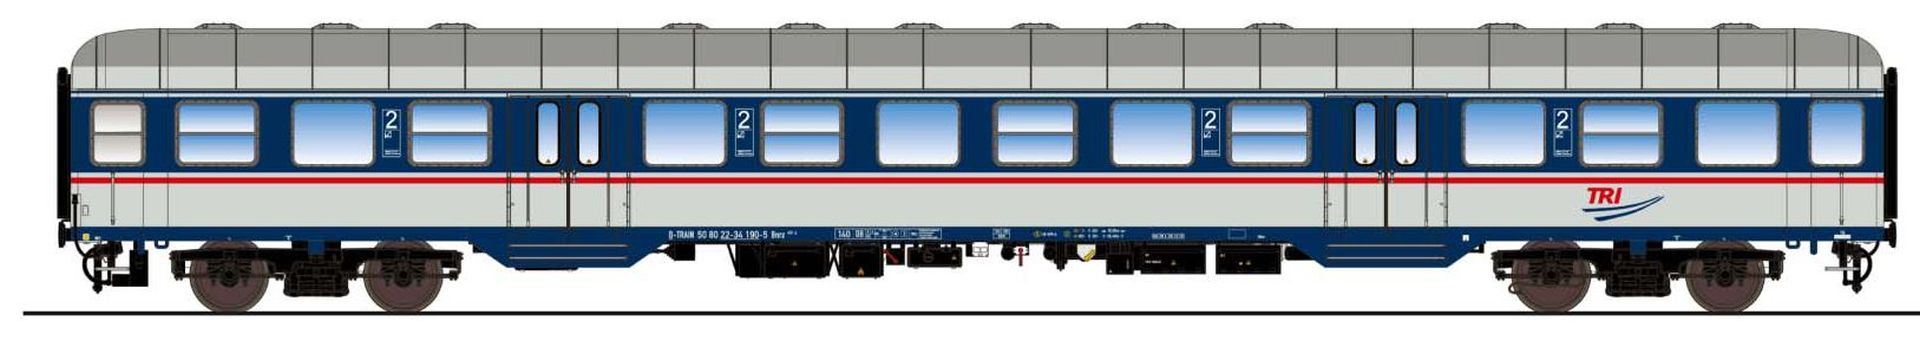 ESU 36063 - Personenwagen 'Silberling', Bnrz 451.4, 80 22-34 190-5, TRI, Ep.VI